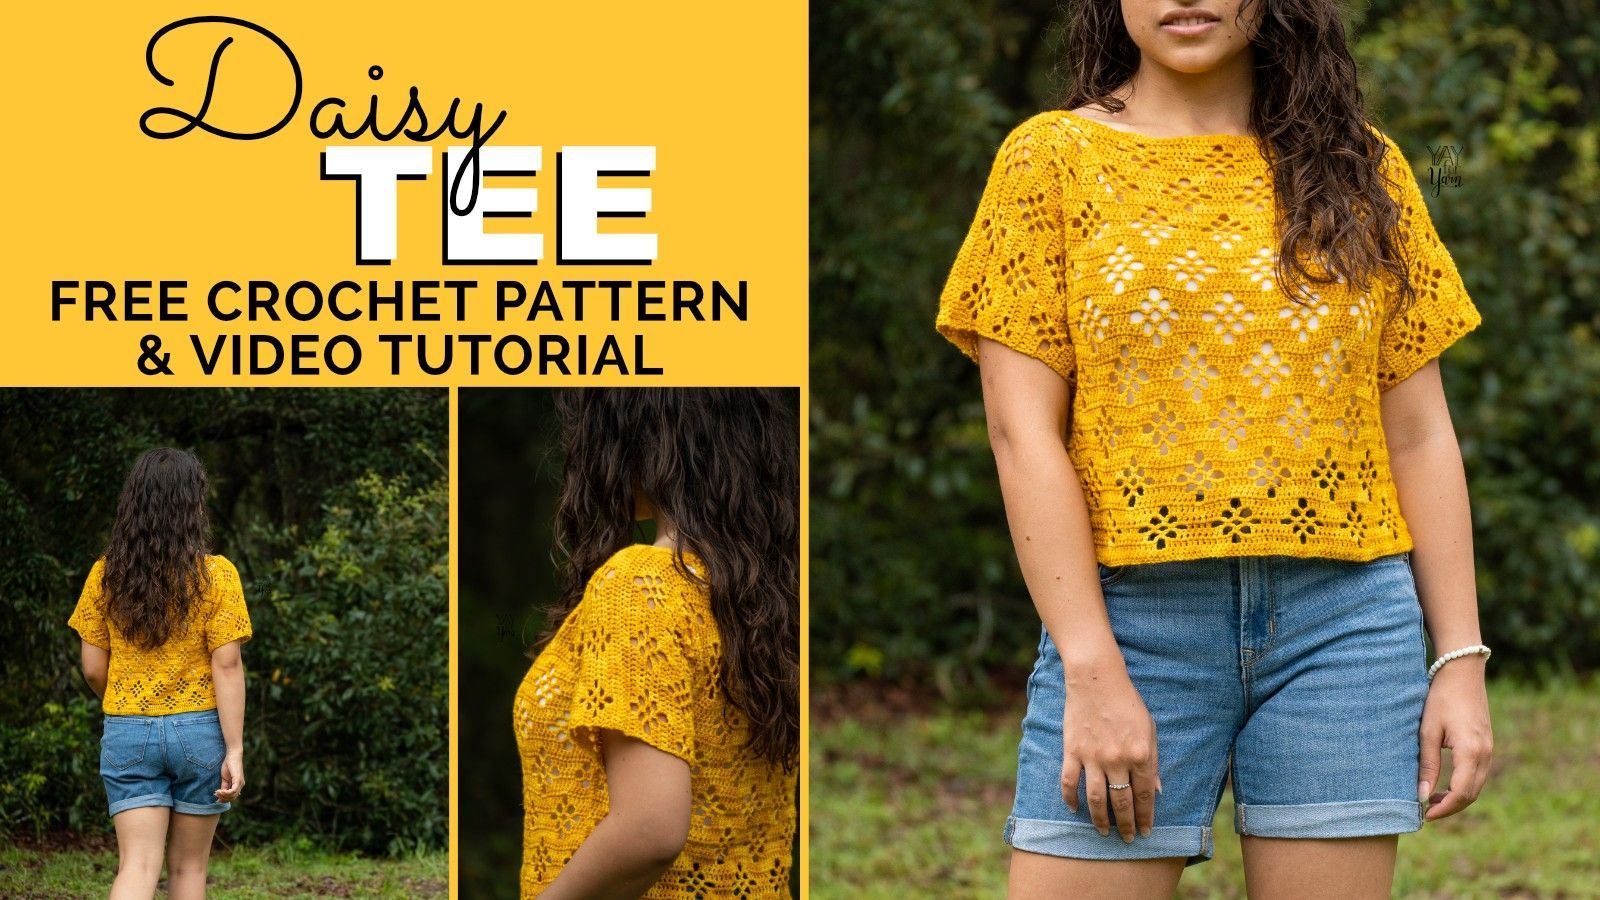 12 Best Crochet Summer Tee Top Free Patterns - Your Crochet